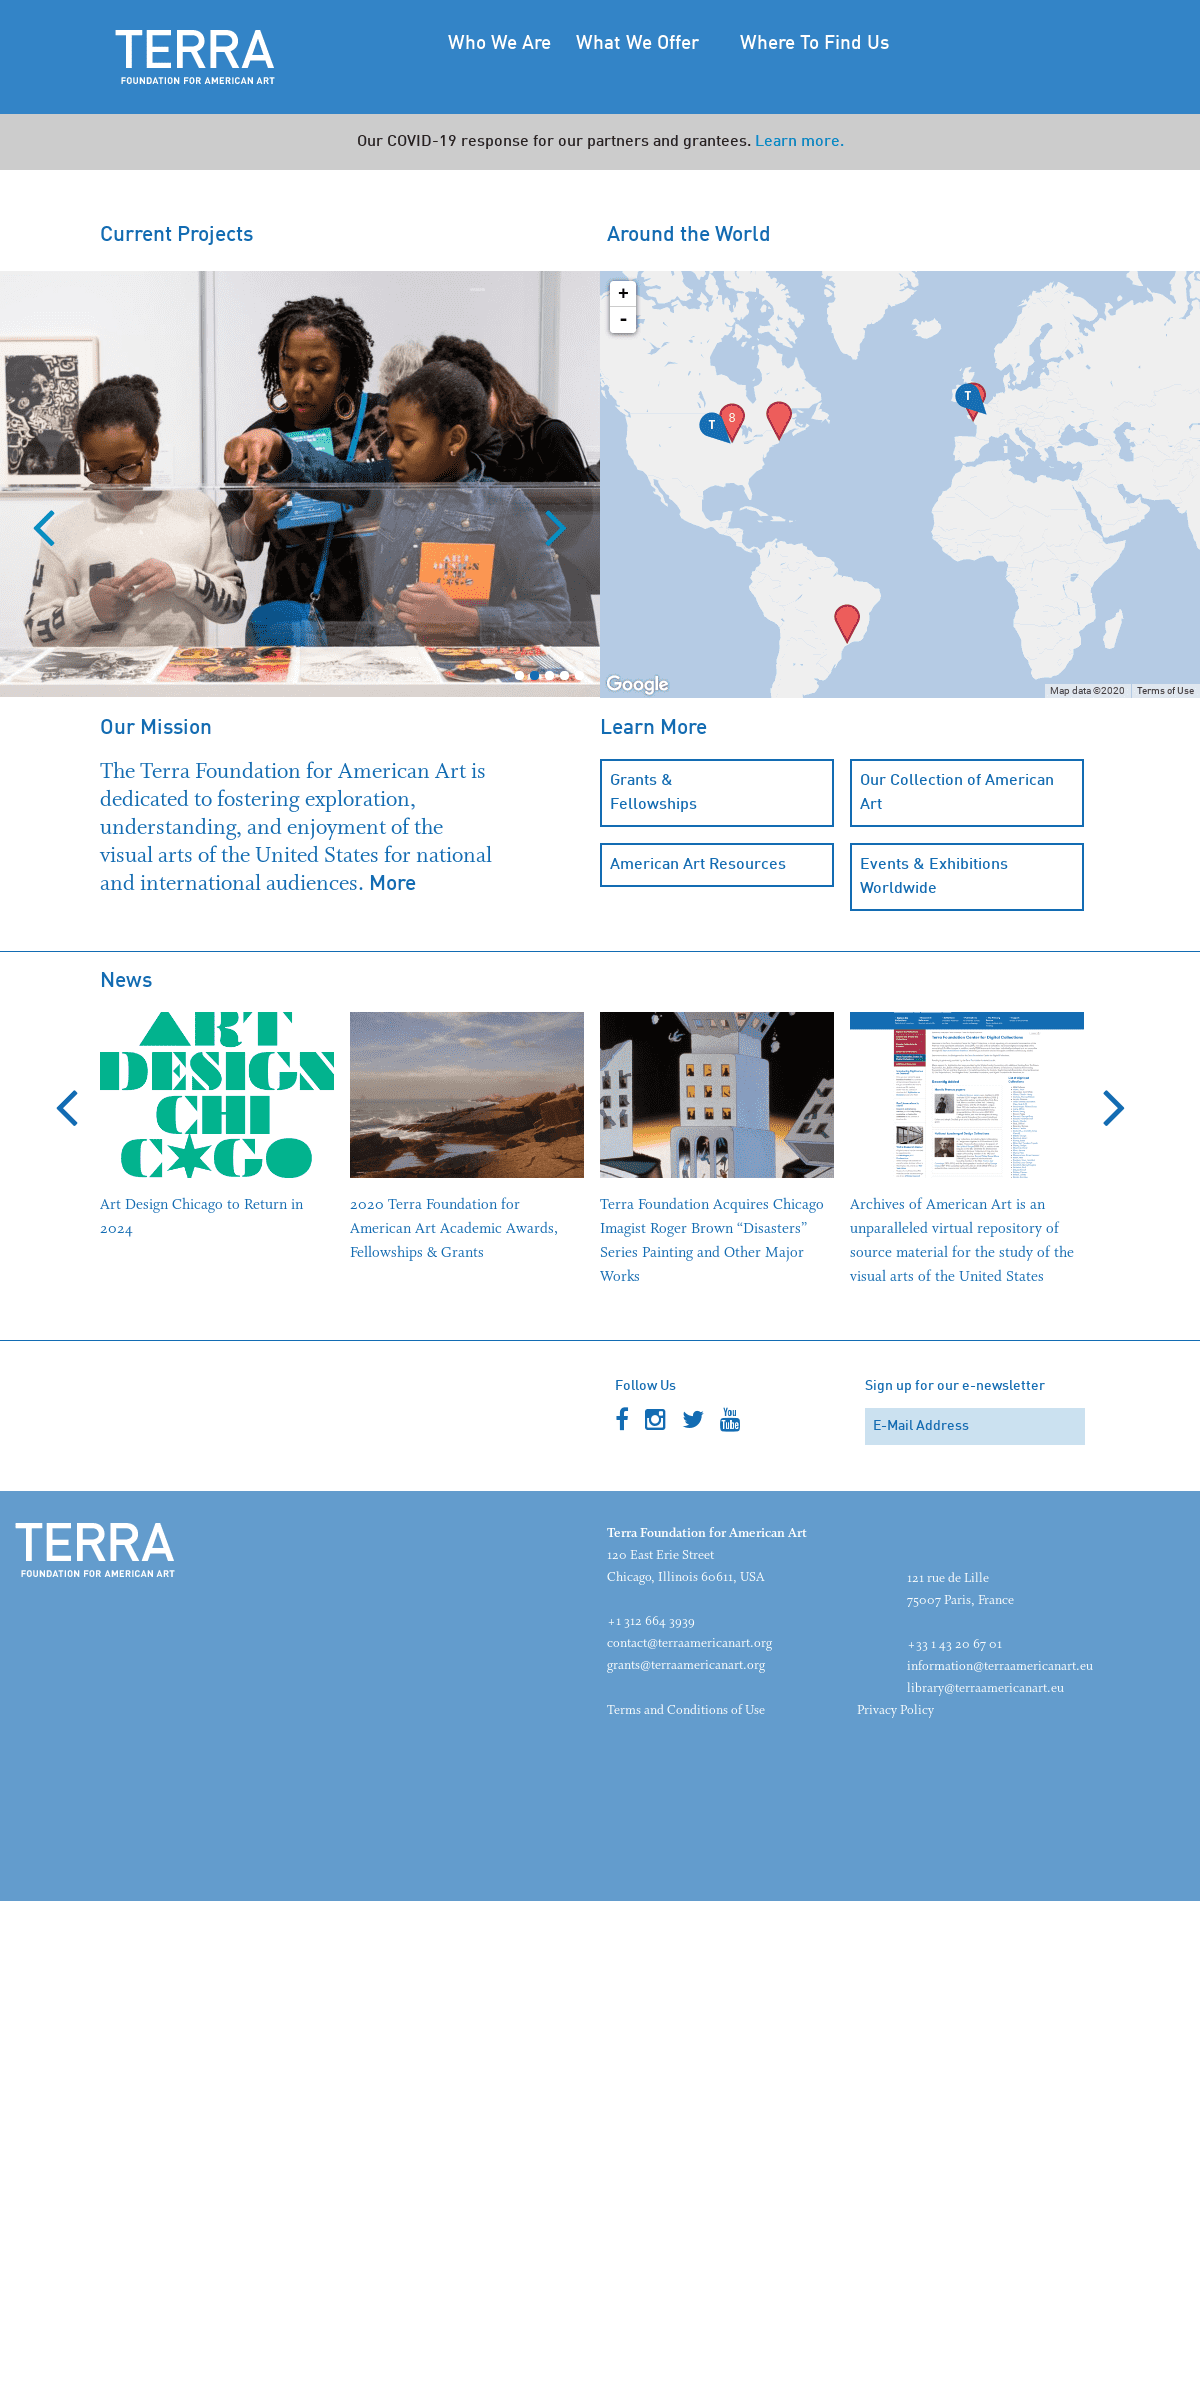 A complete backup of terraamericanart.org